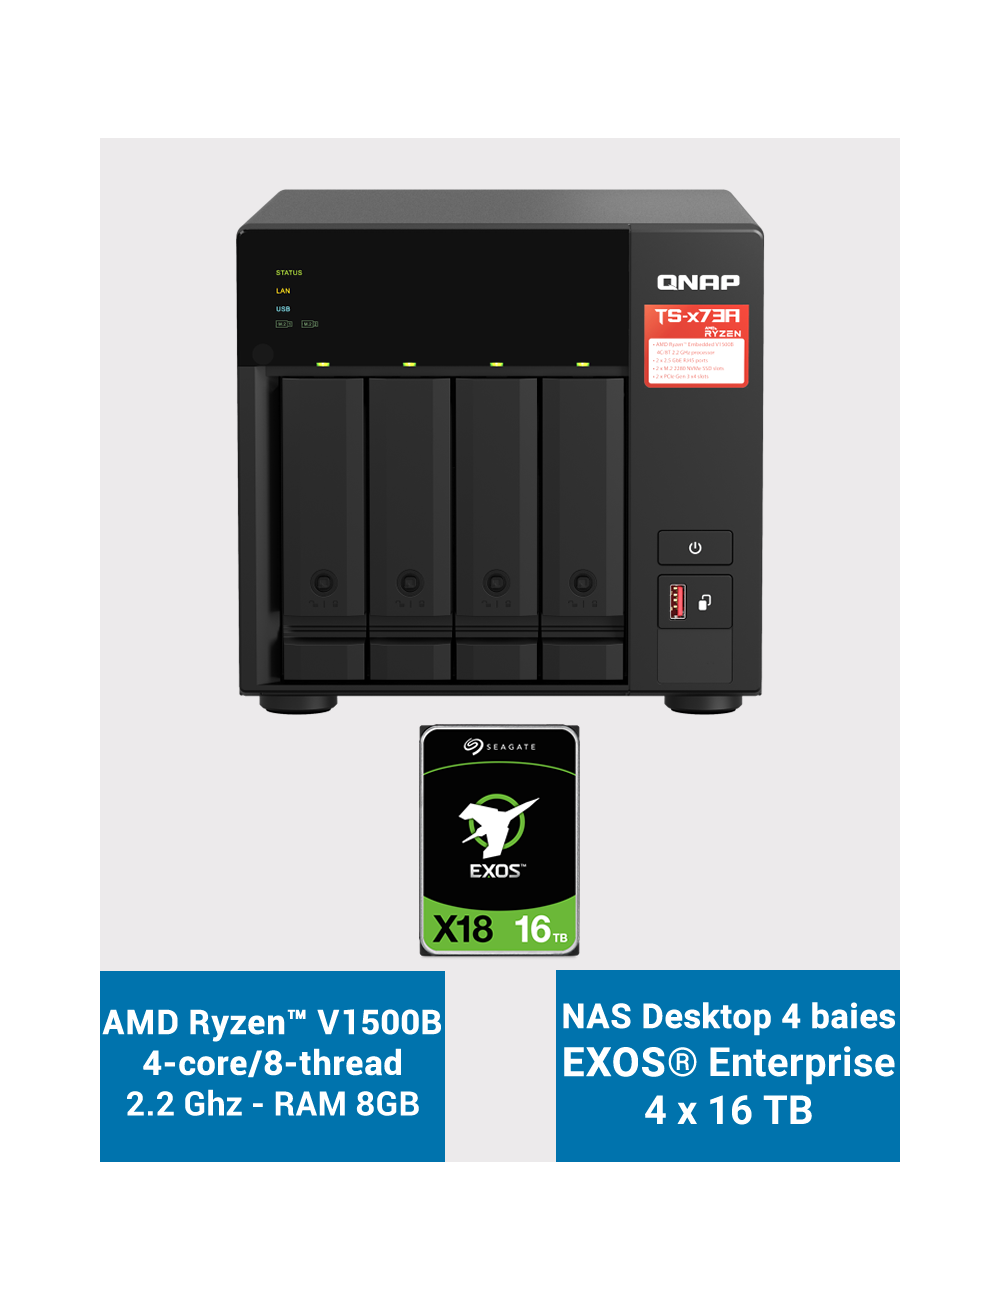 Qnap TS-473A 8GB NAS Server 4 bays EXOS Enterprise 64TB (4x16TB)